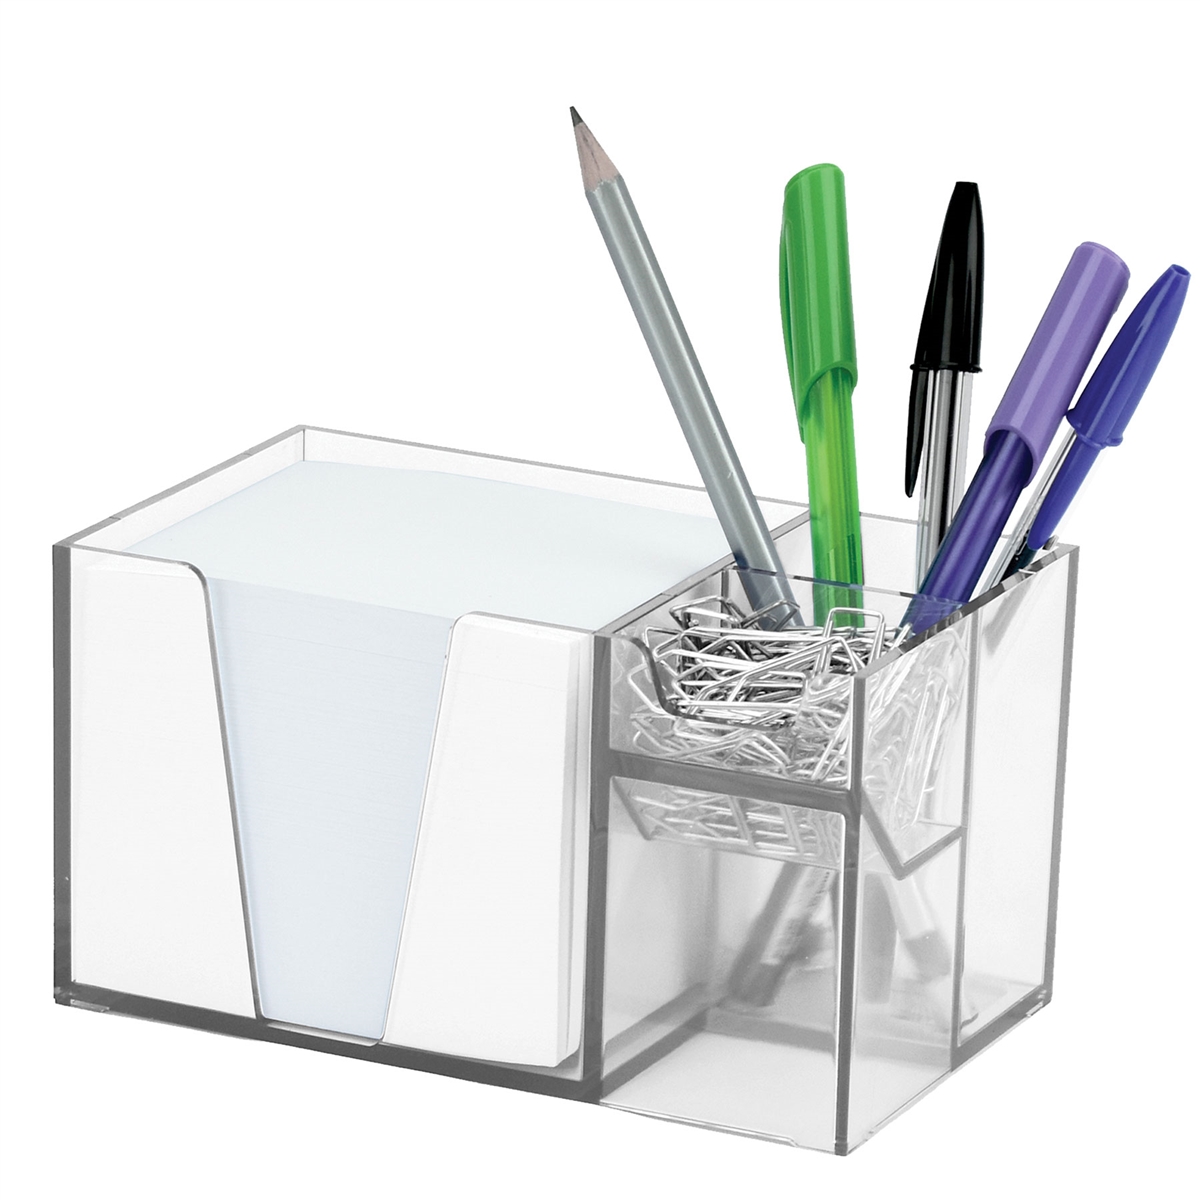 Acrimet Desk Drawer Organizer Clear Crystal 7 Pack 4 Sizes 975.0